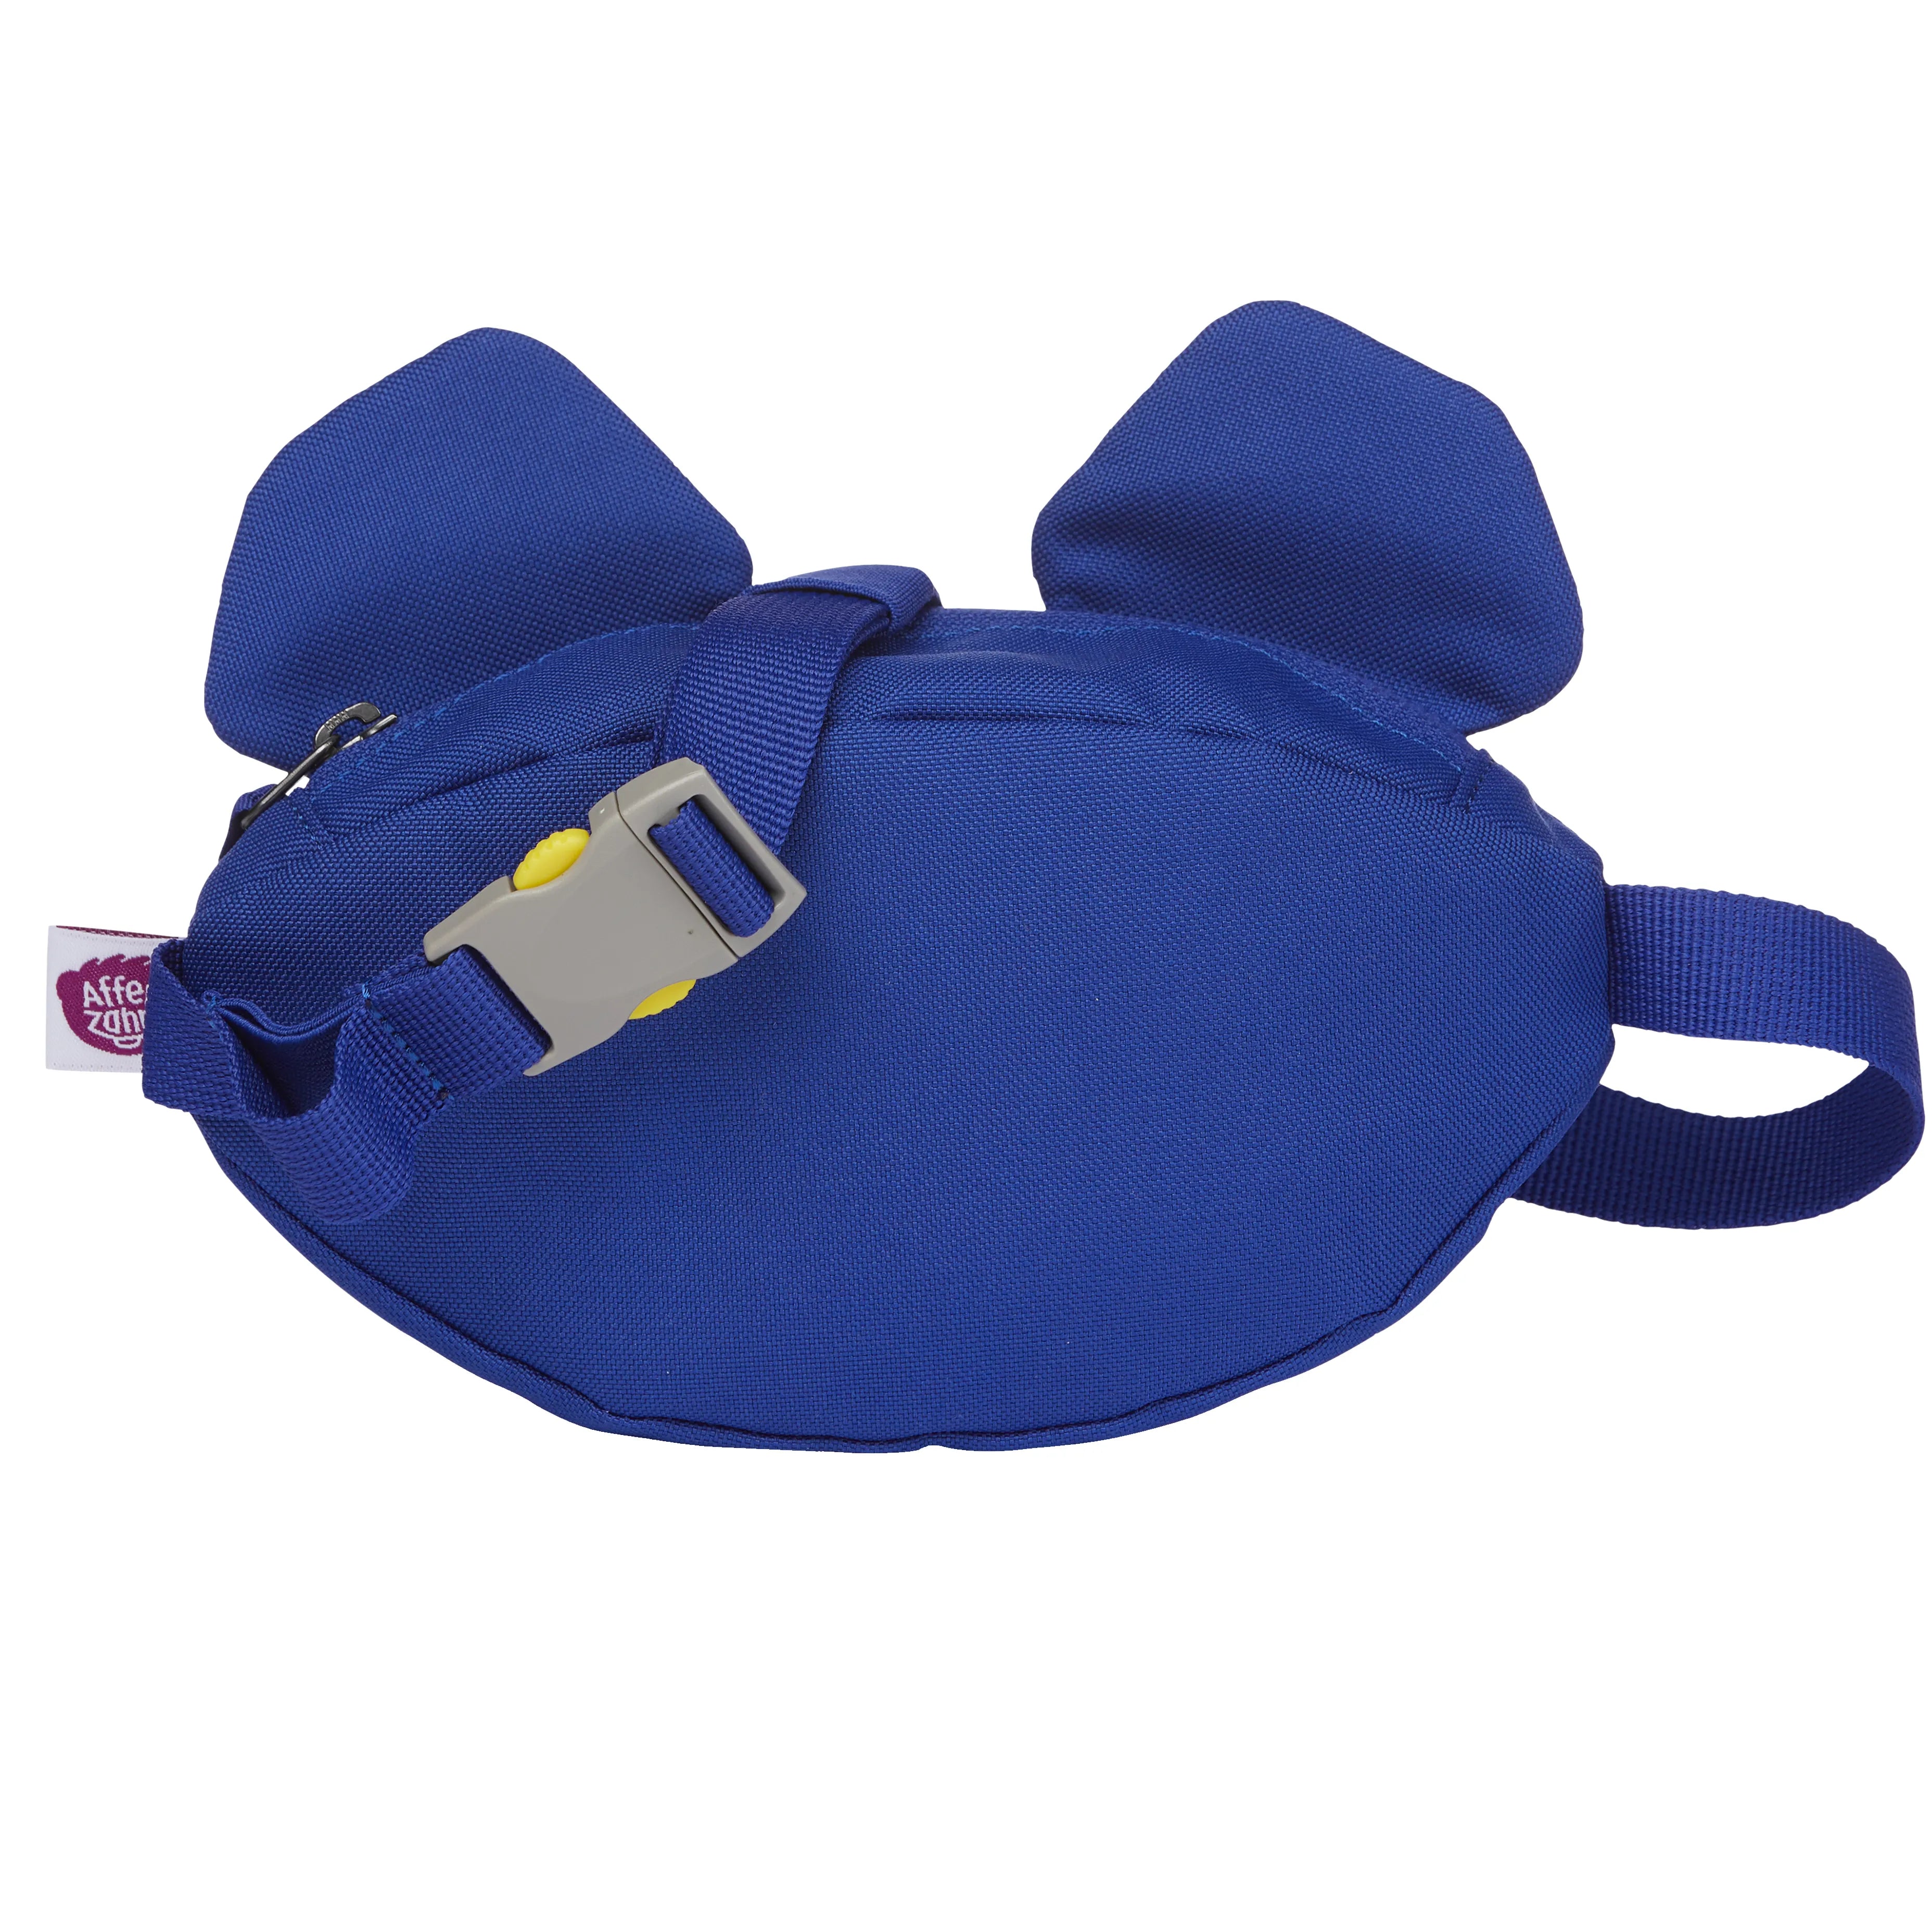 Affenzahn hip bag bum bag for children 22 cm - WDR Mouse